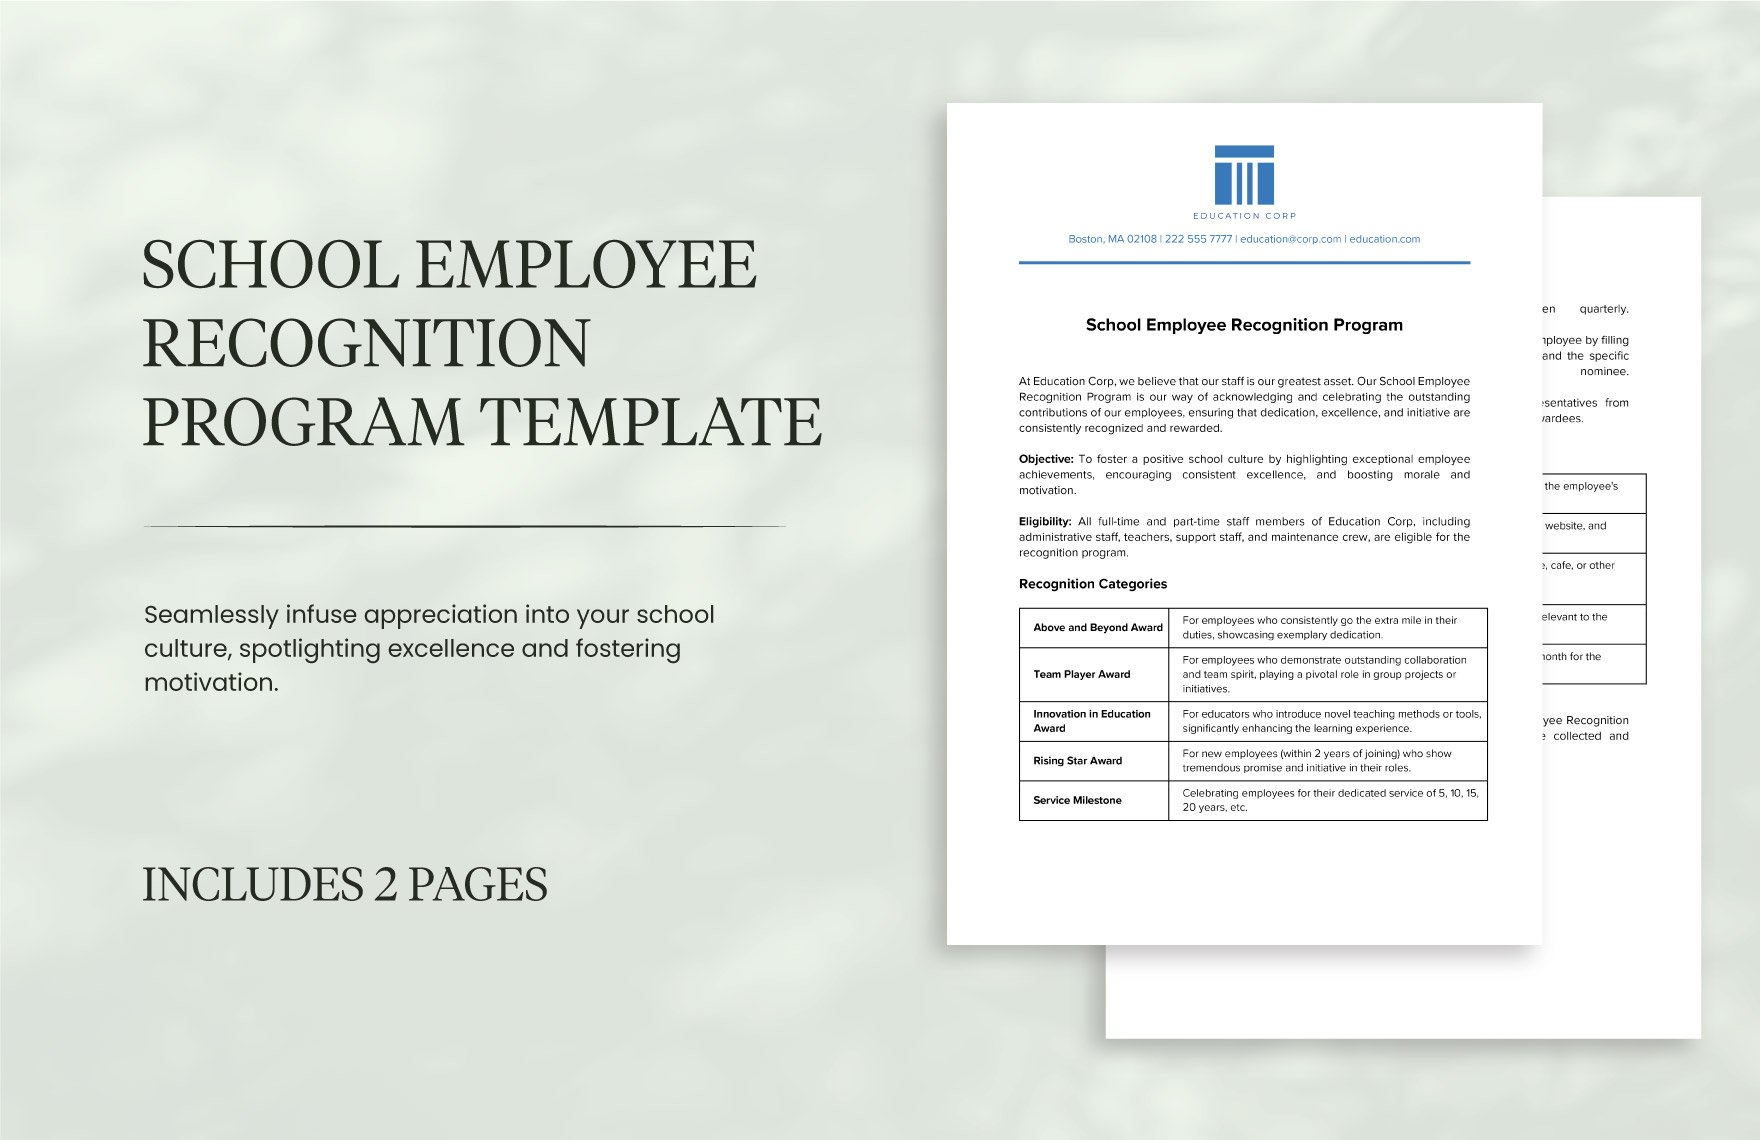 School Employee Recognition Program Template